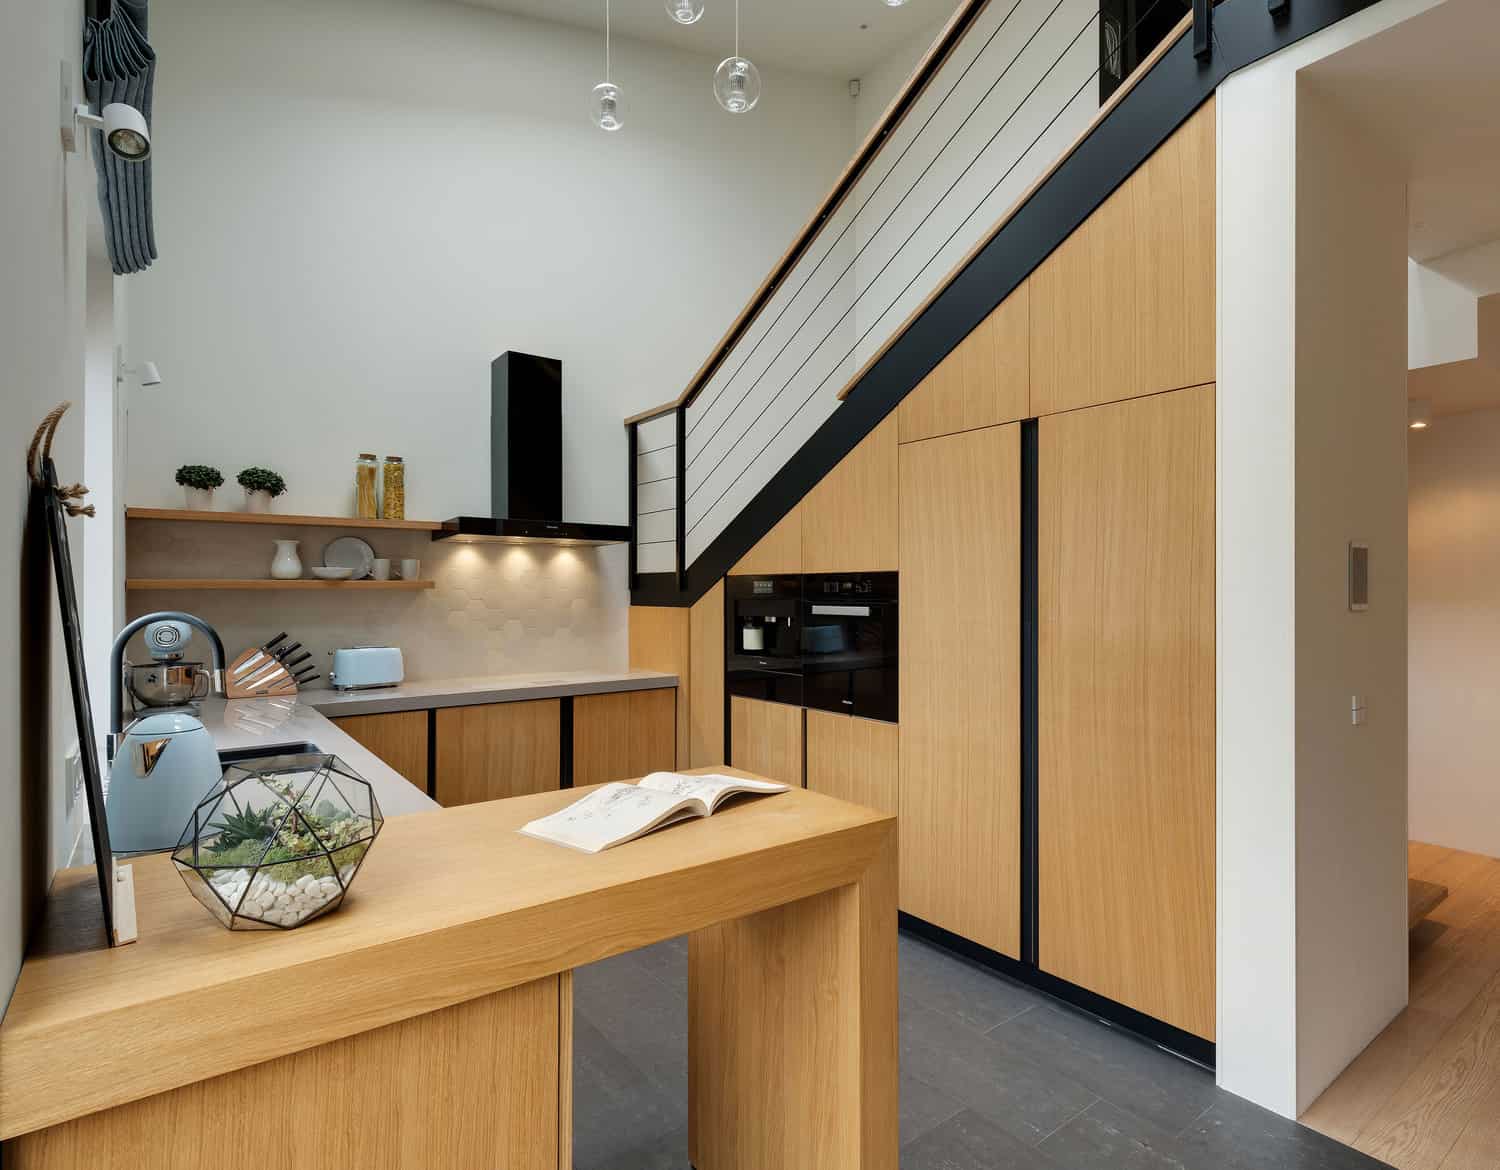 Apartment With Slide-KI Design-12-1 Kindesign